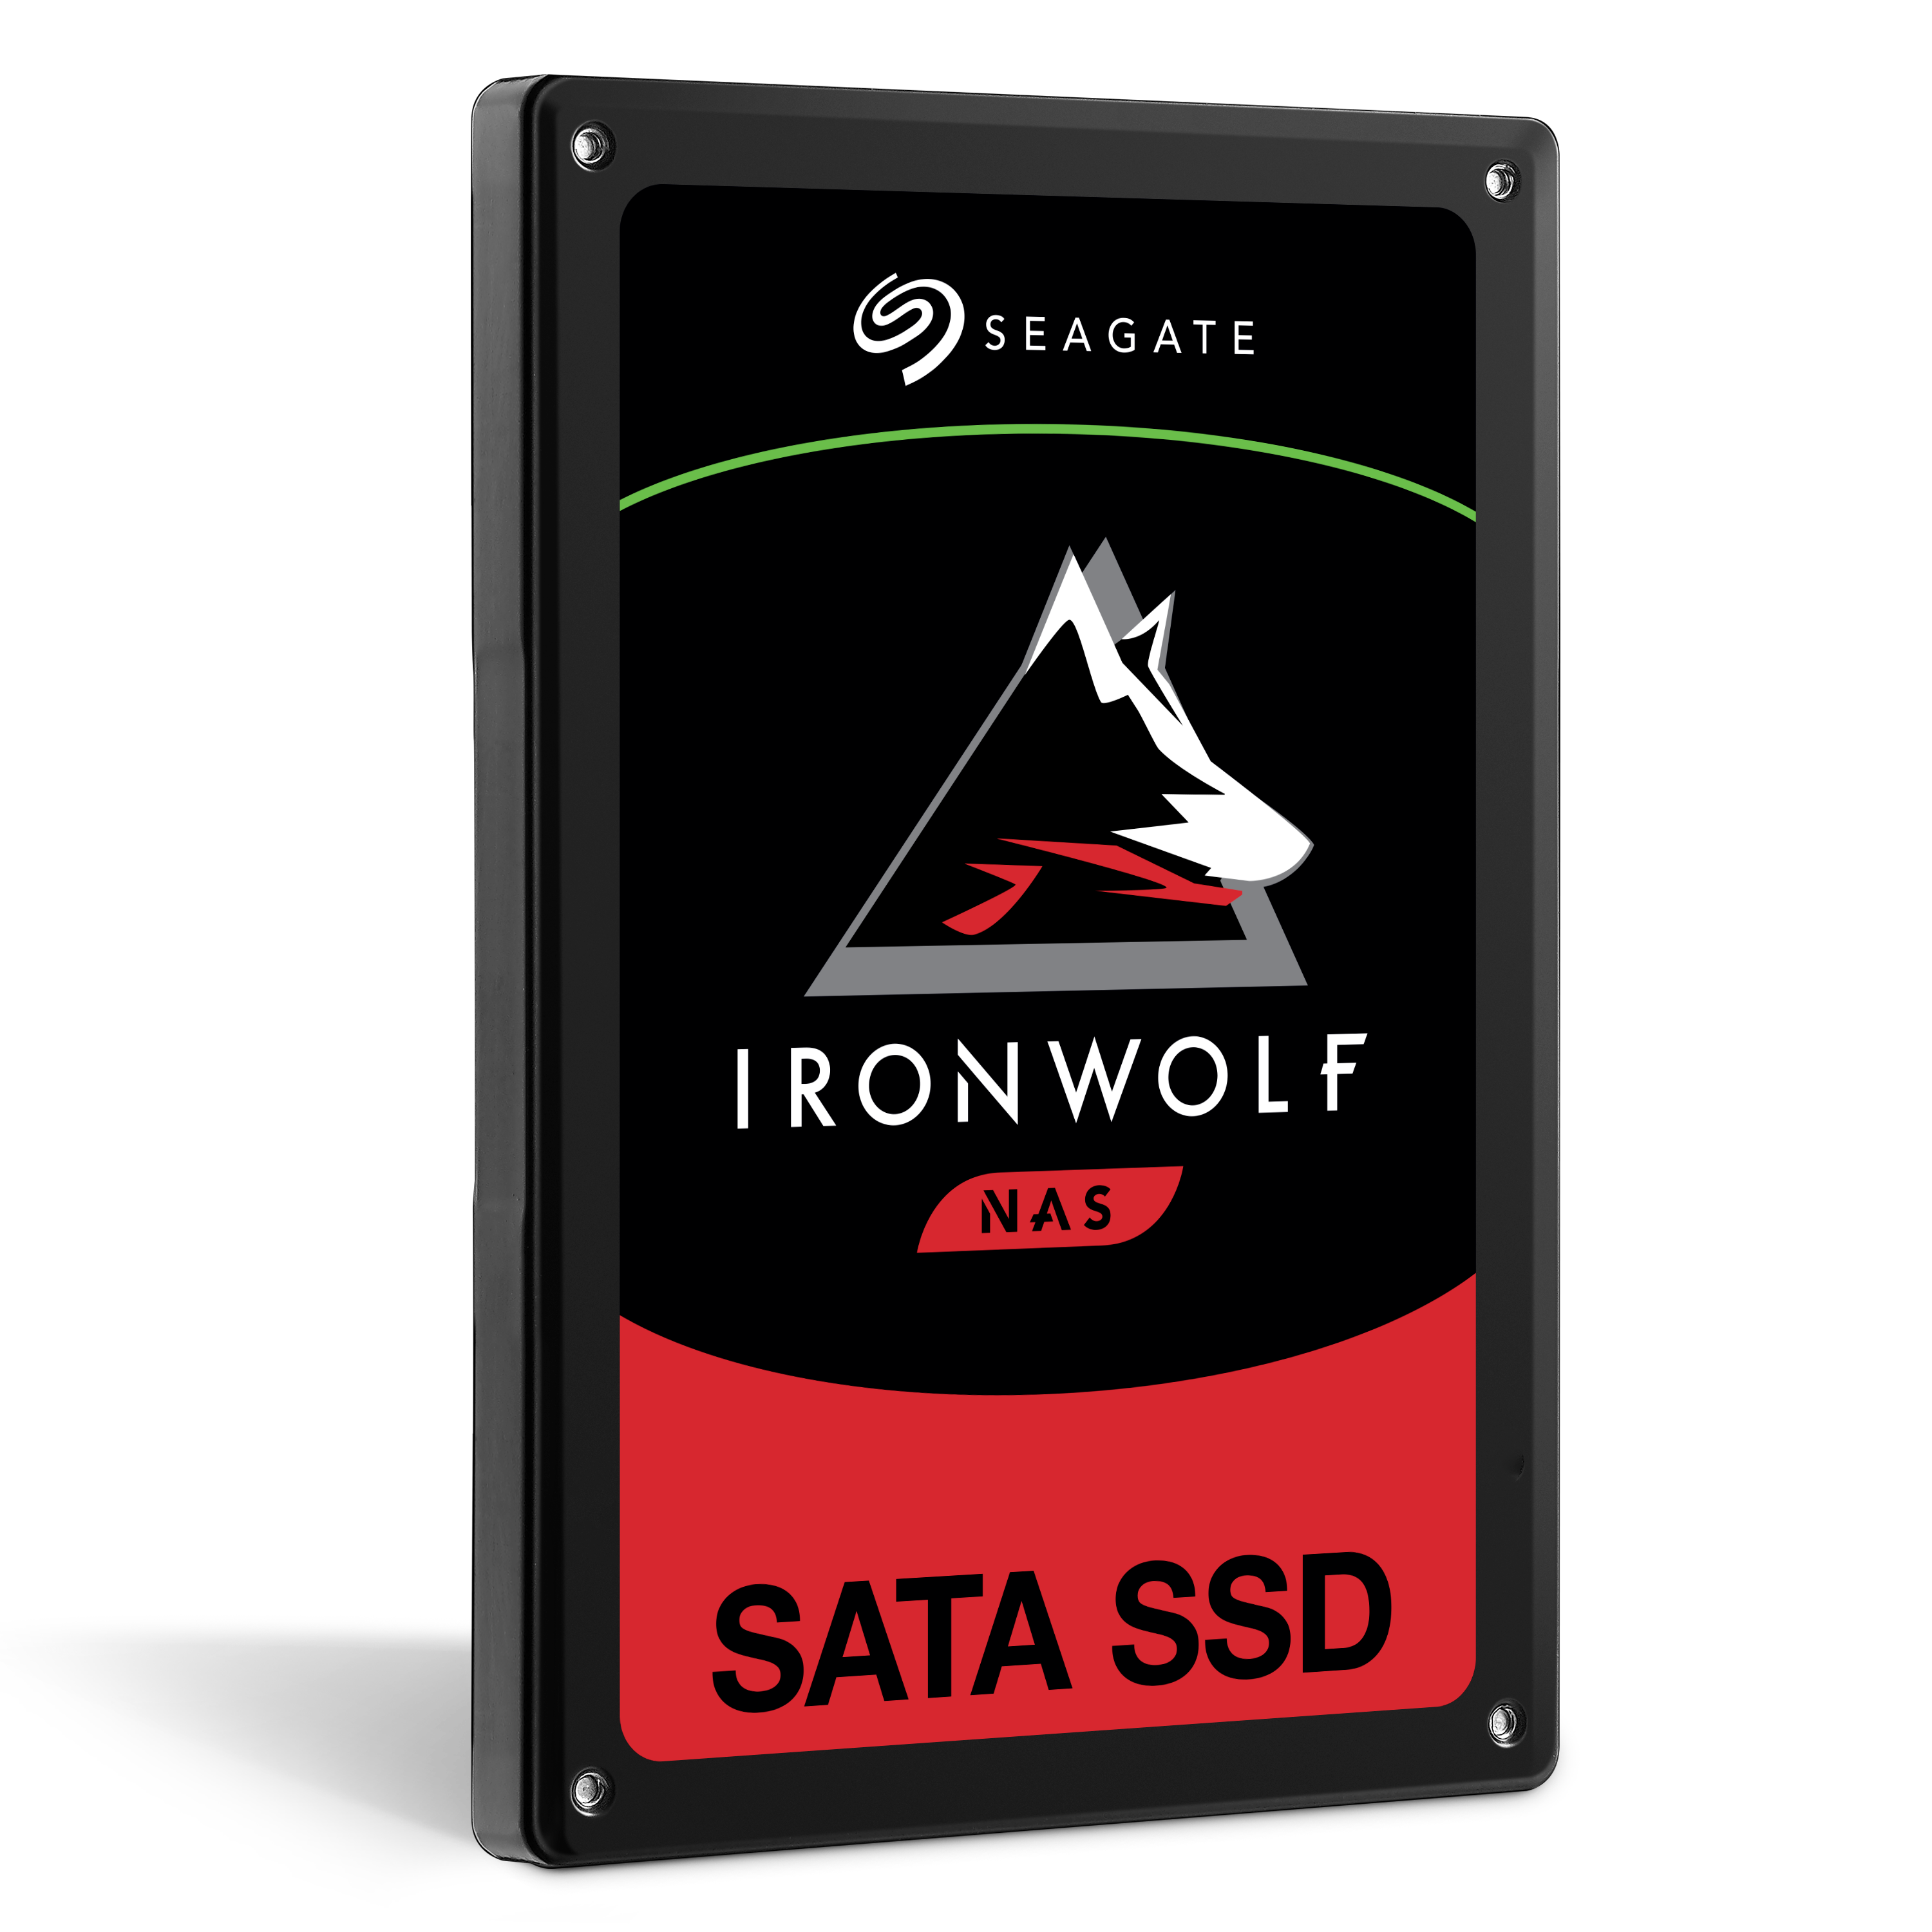 6 IronWolf Zoll, 110 Festplatte SEAGATE GB SATA SSD Gbps, 960 intern Retail, 2,5